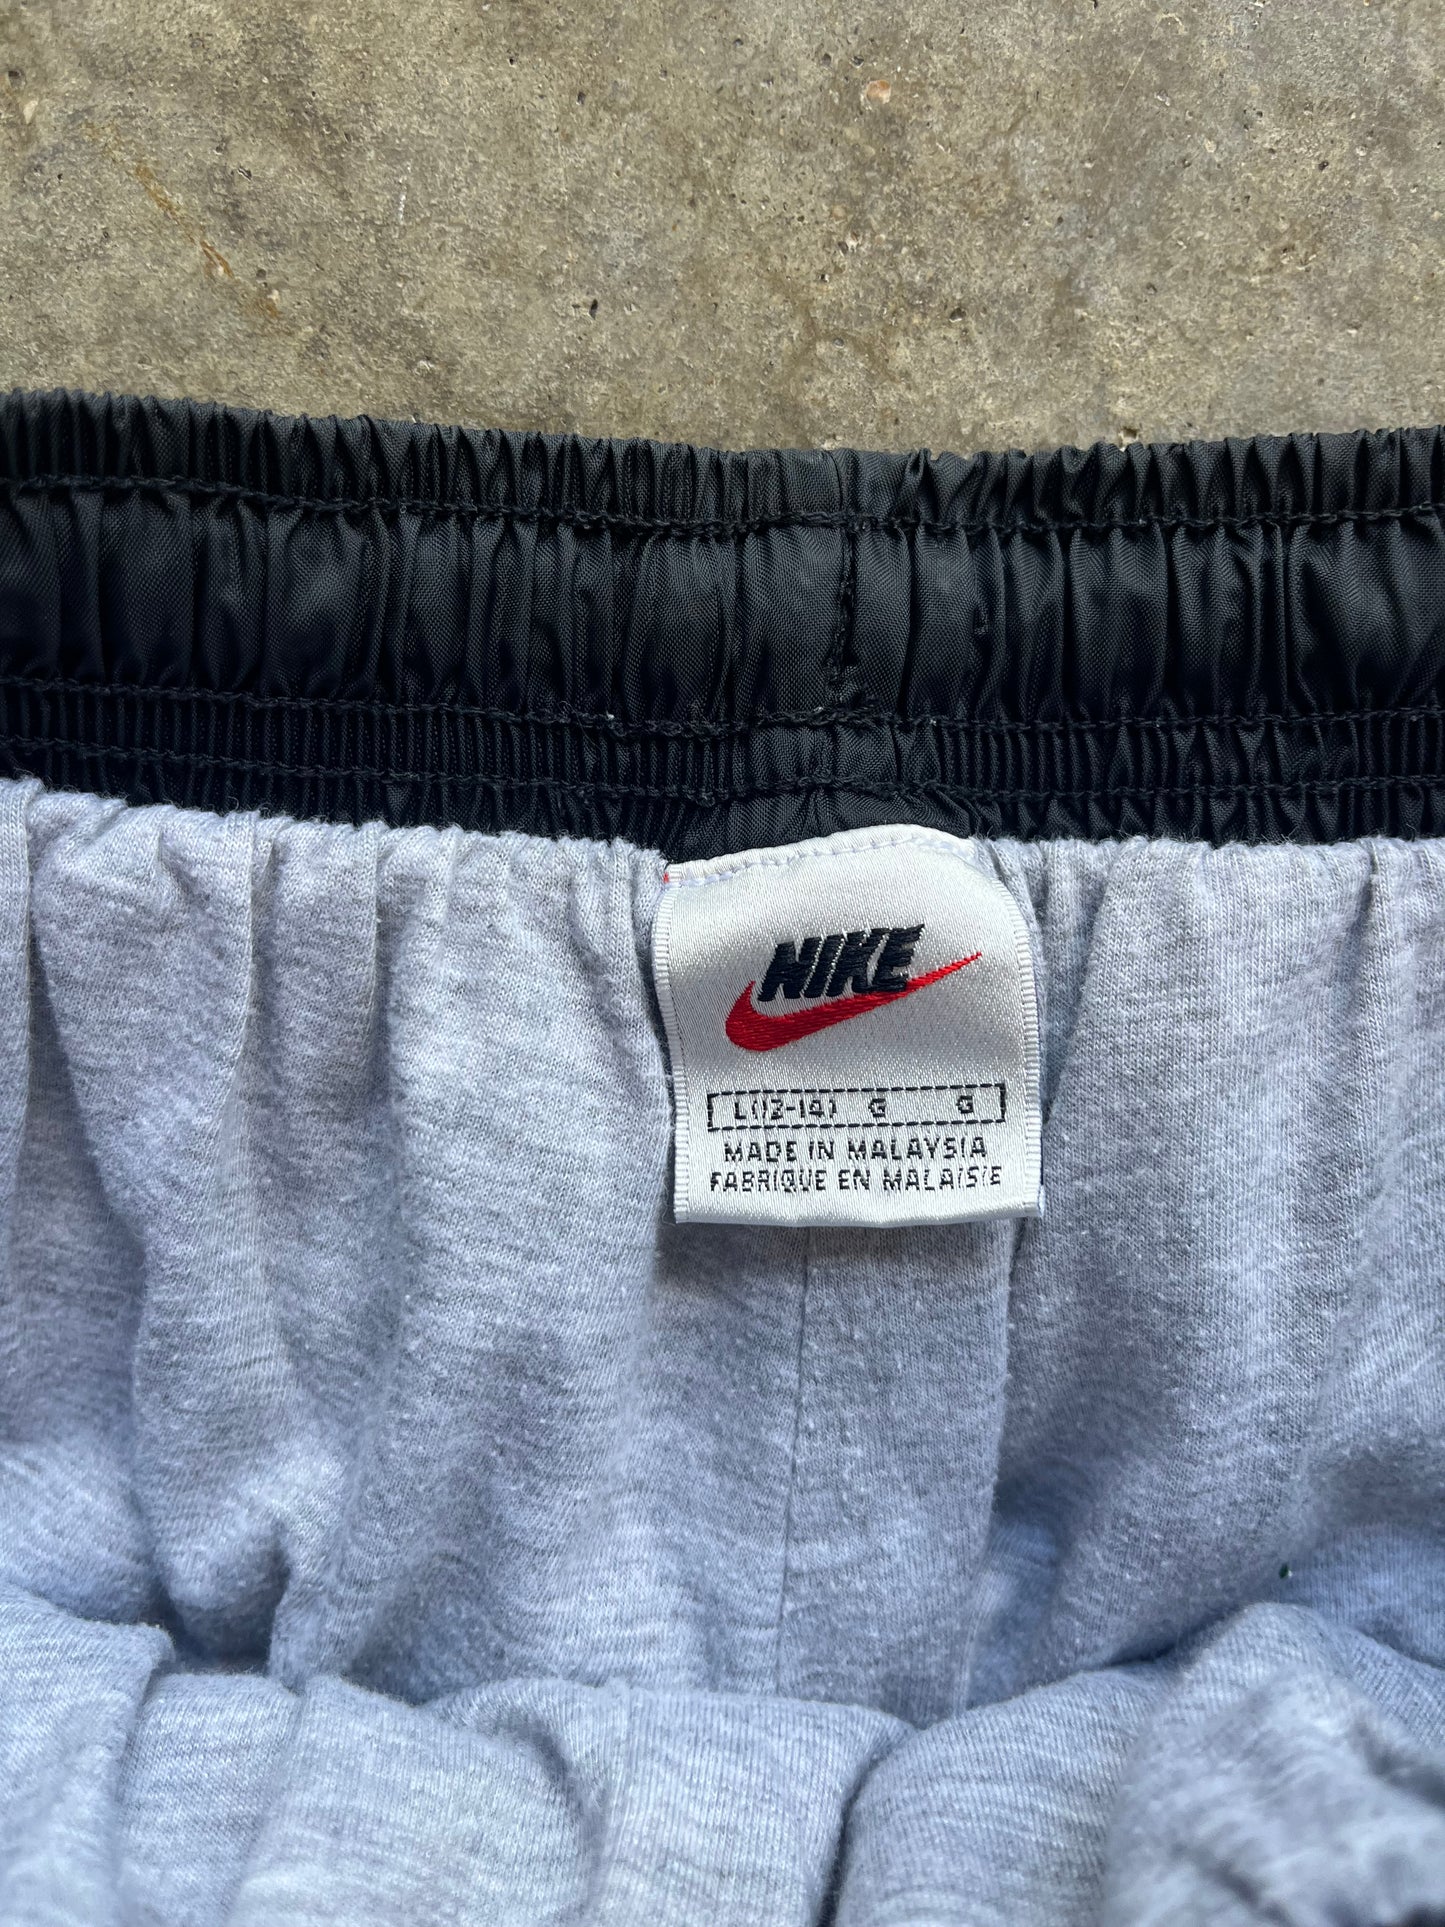 (L) Nike Nylon Sweatpants